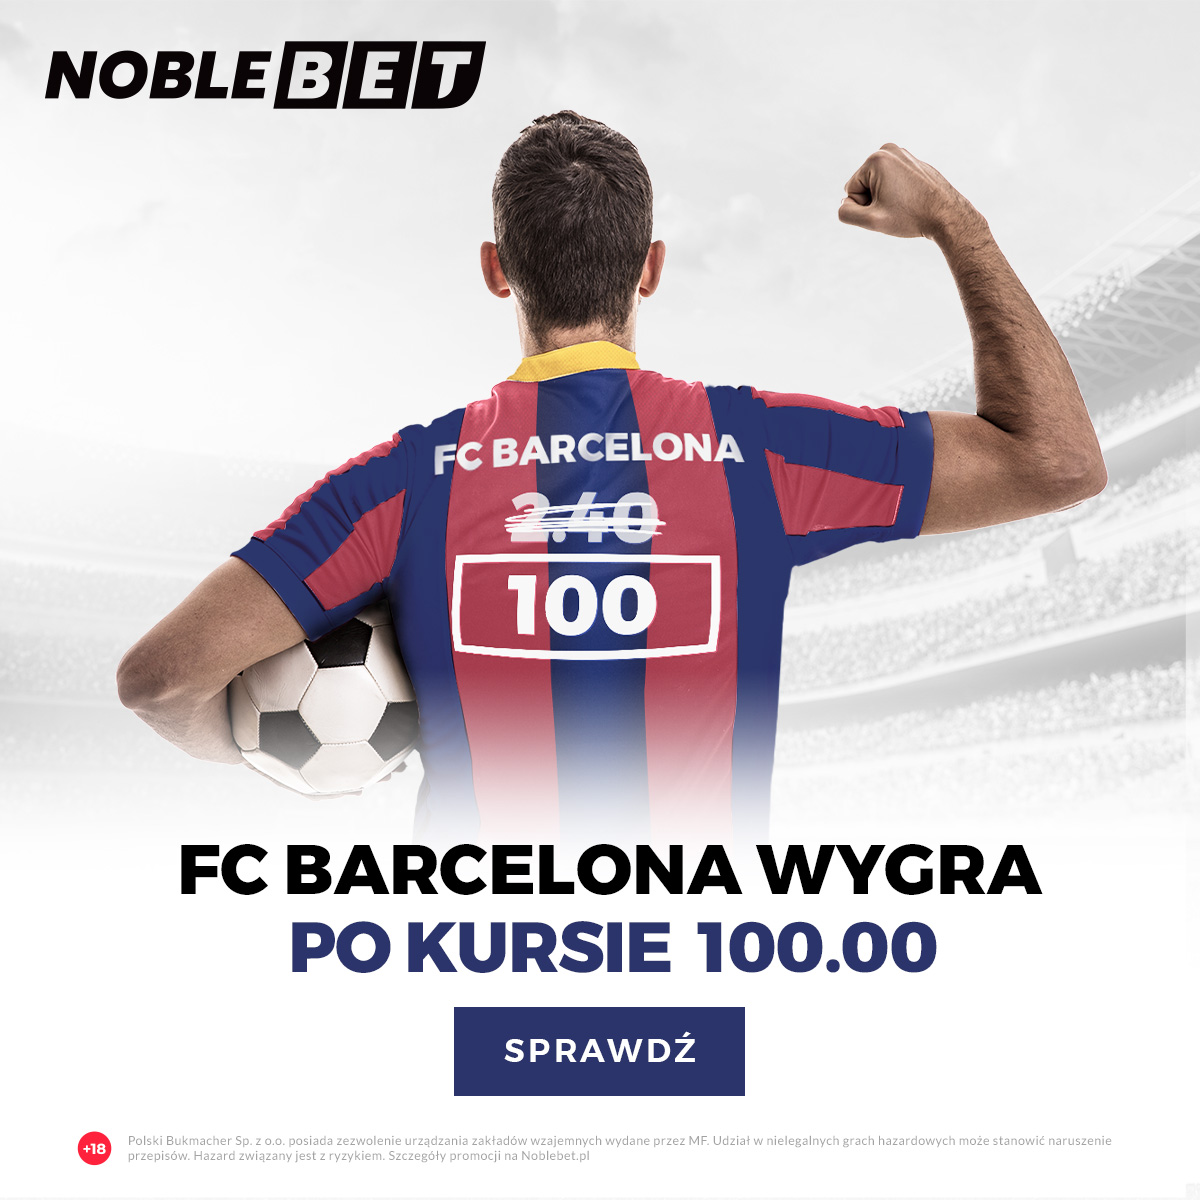 FC Barcelona wygra po kursie 100.00 – promocja Noblebet